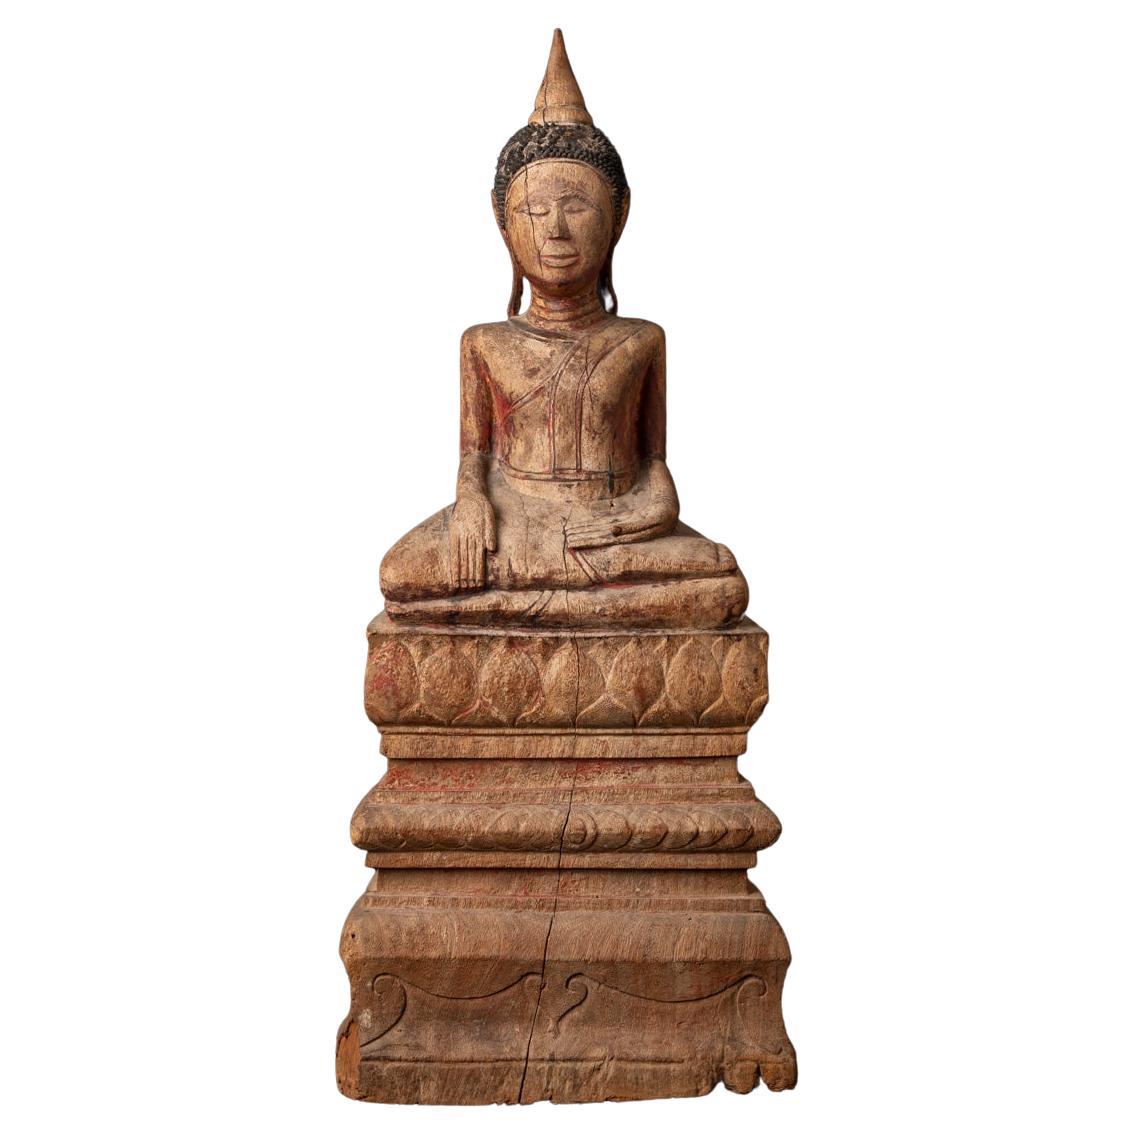 Antike Buddha-Statue aus Holz aus Kambodscha in Bhumisparsha-Mudra aus dem 18. Jahrhundert